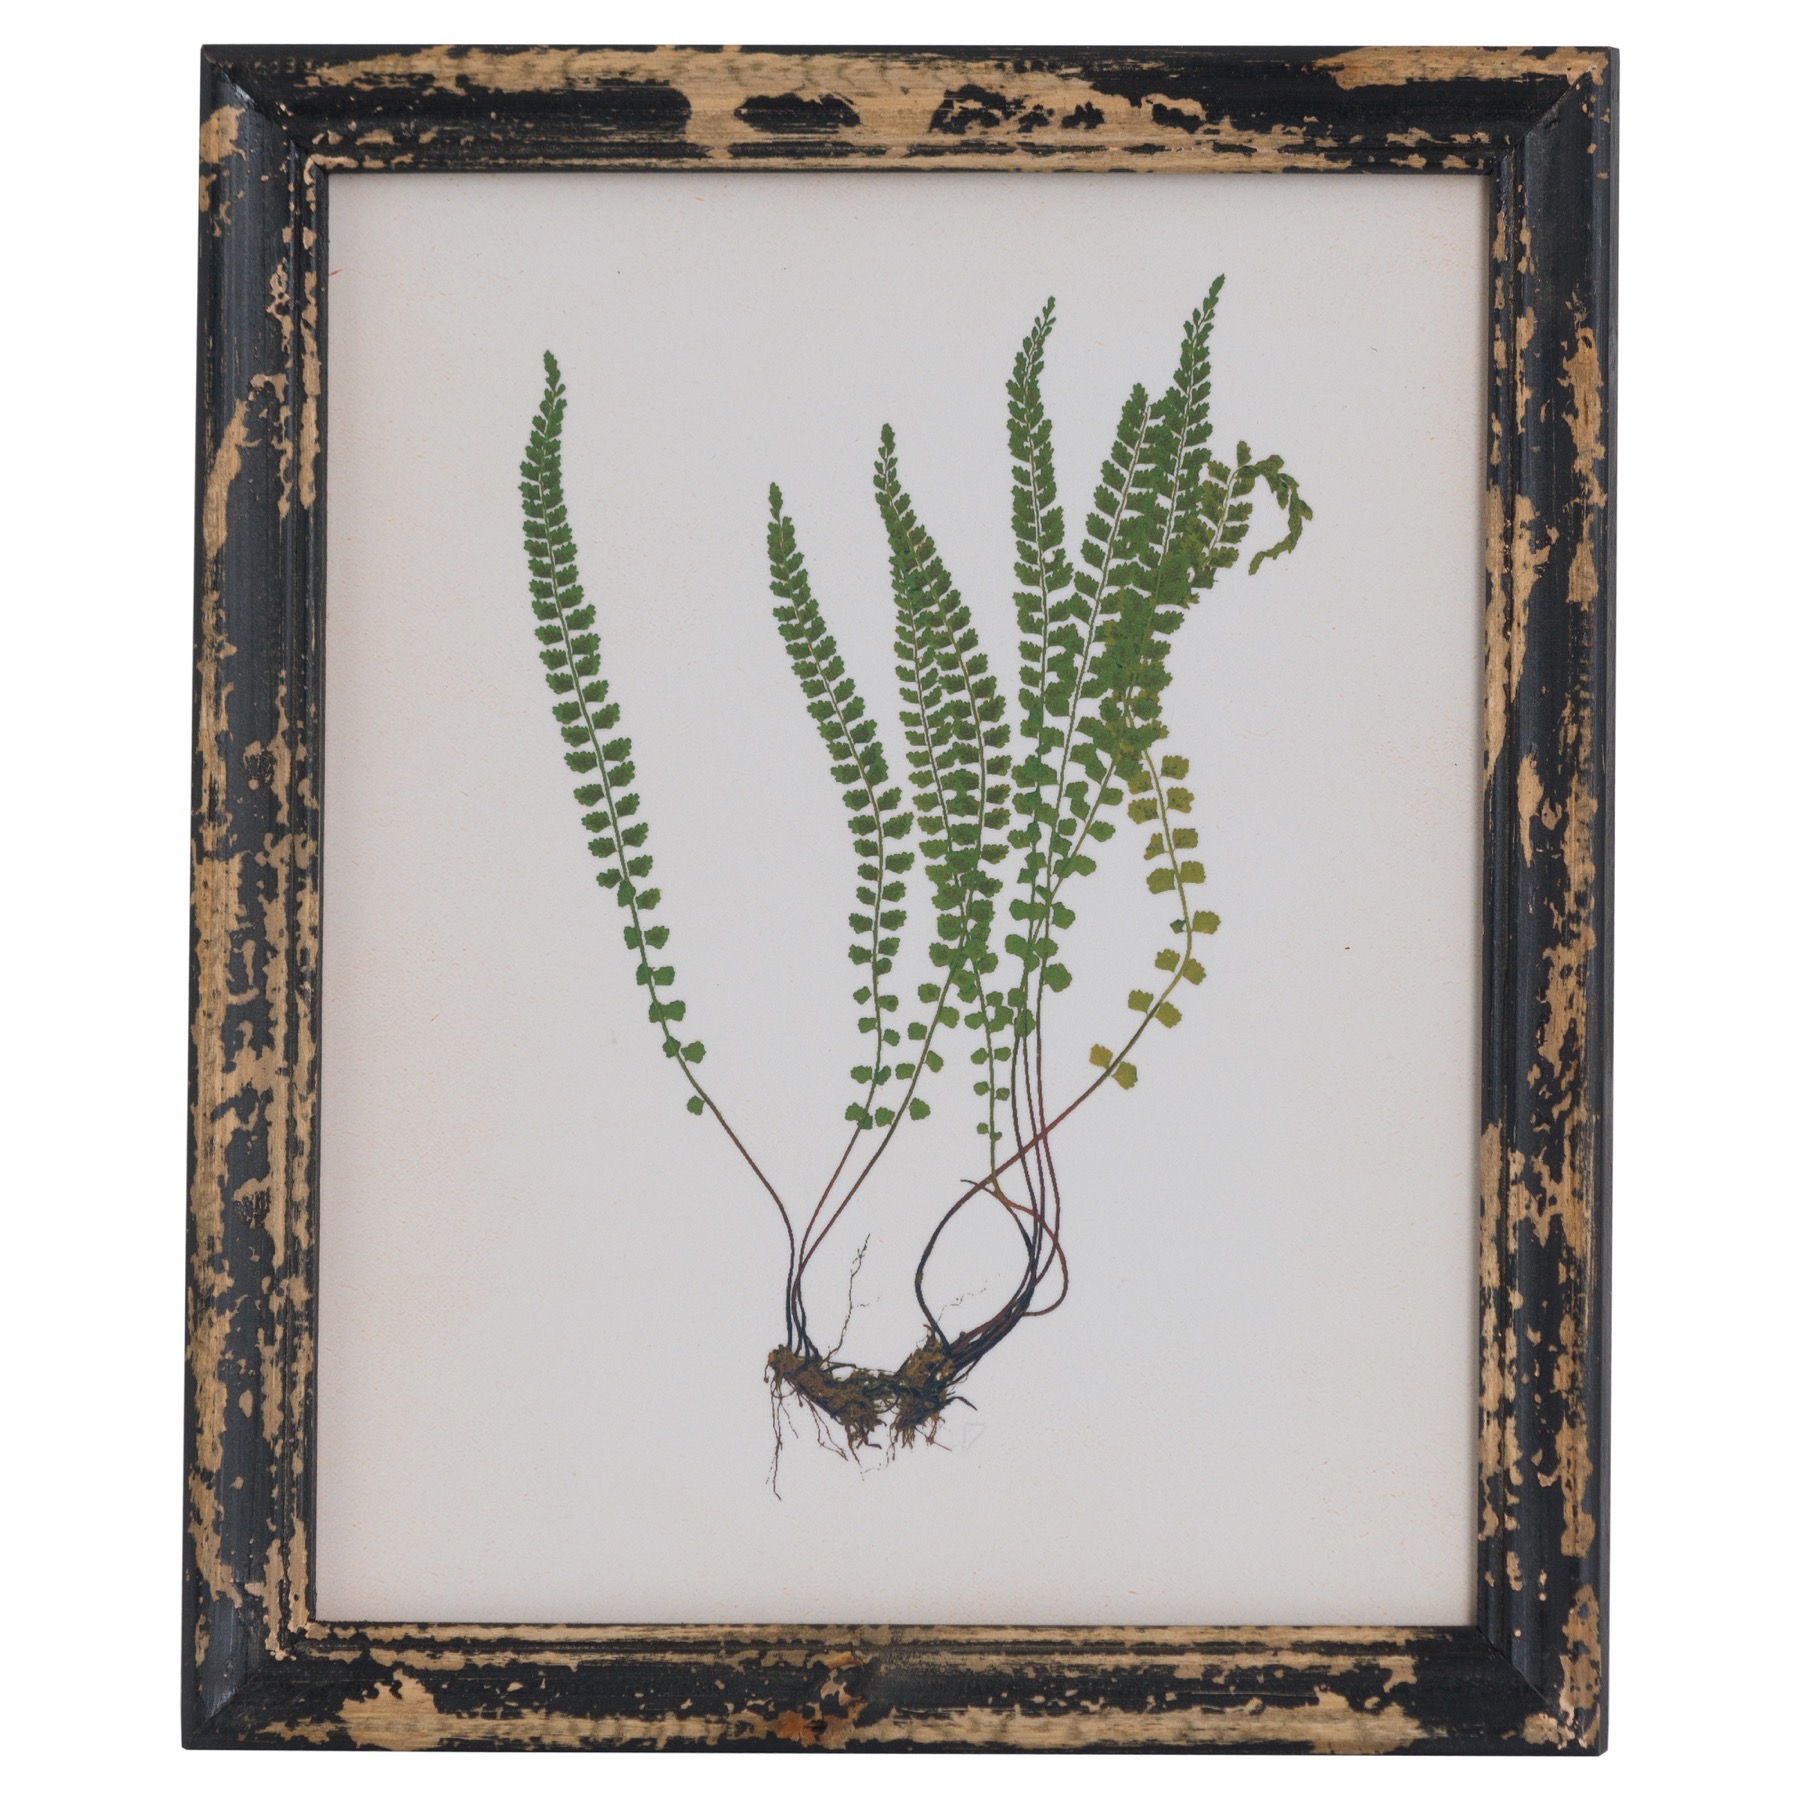 Rustic Framed Botanical Picture - Image 1